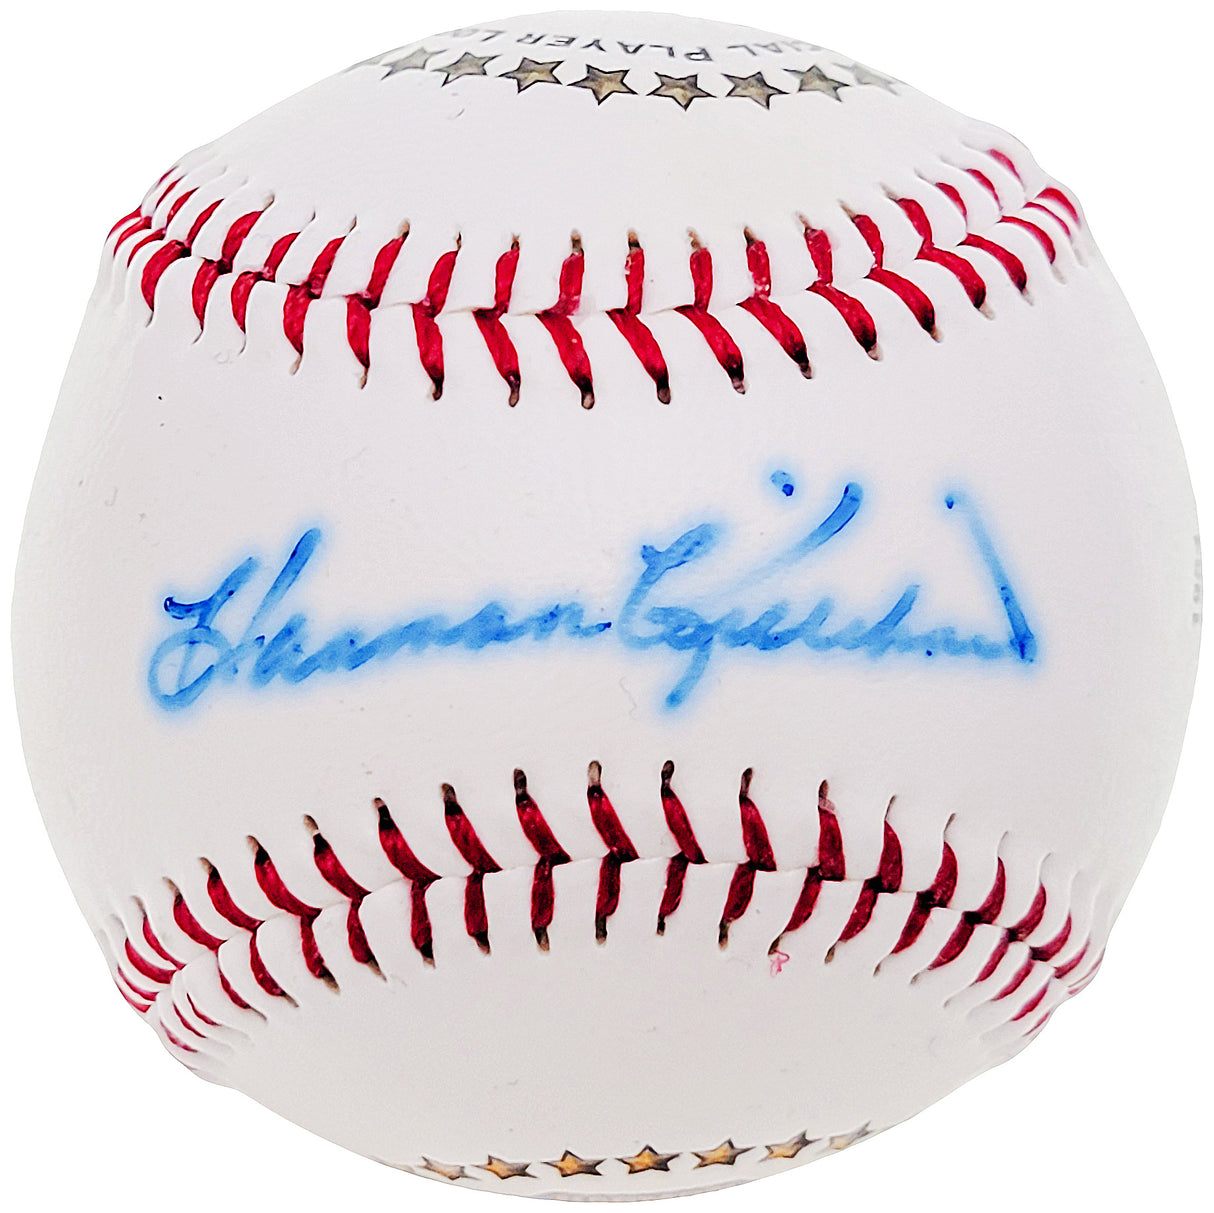 Harmon Killebrew Autographed Official Statball Logo Baseball Minnesota Twins PSA/DNA #S65606